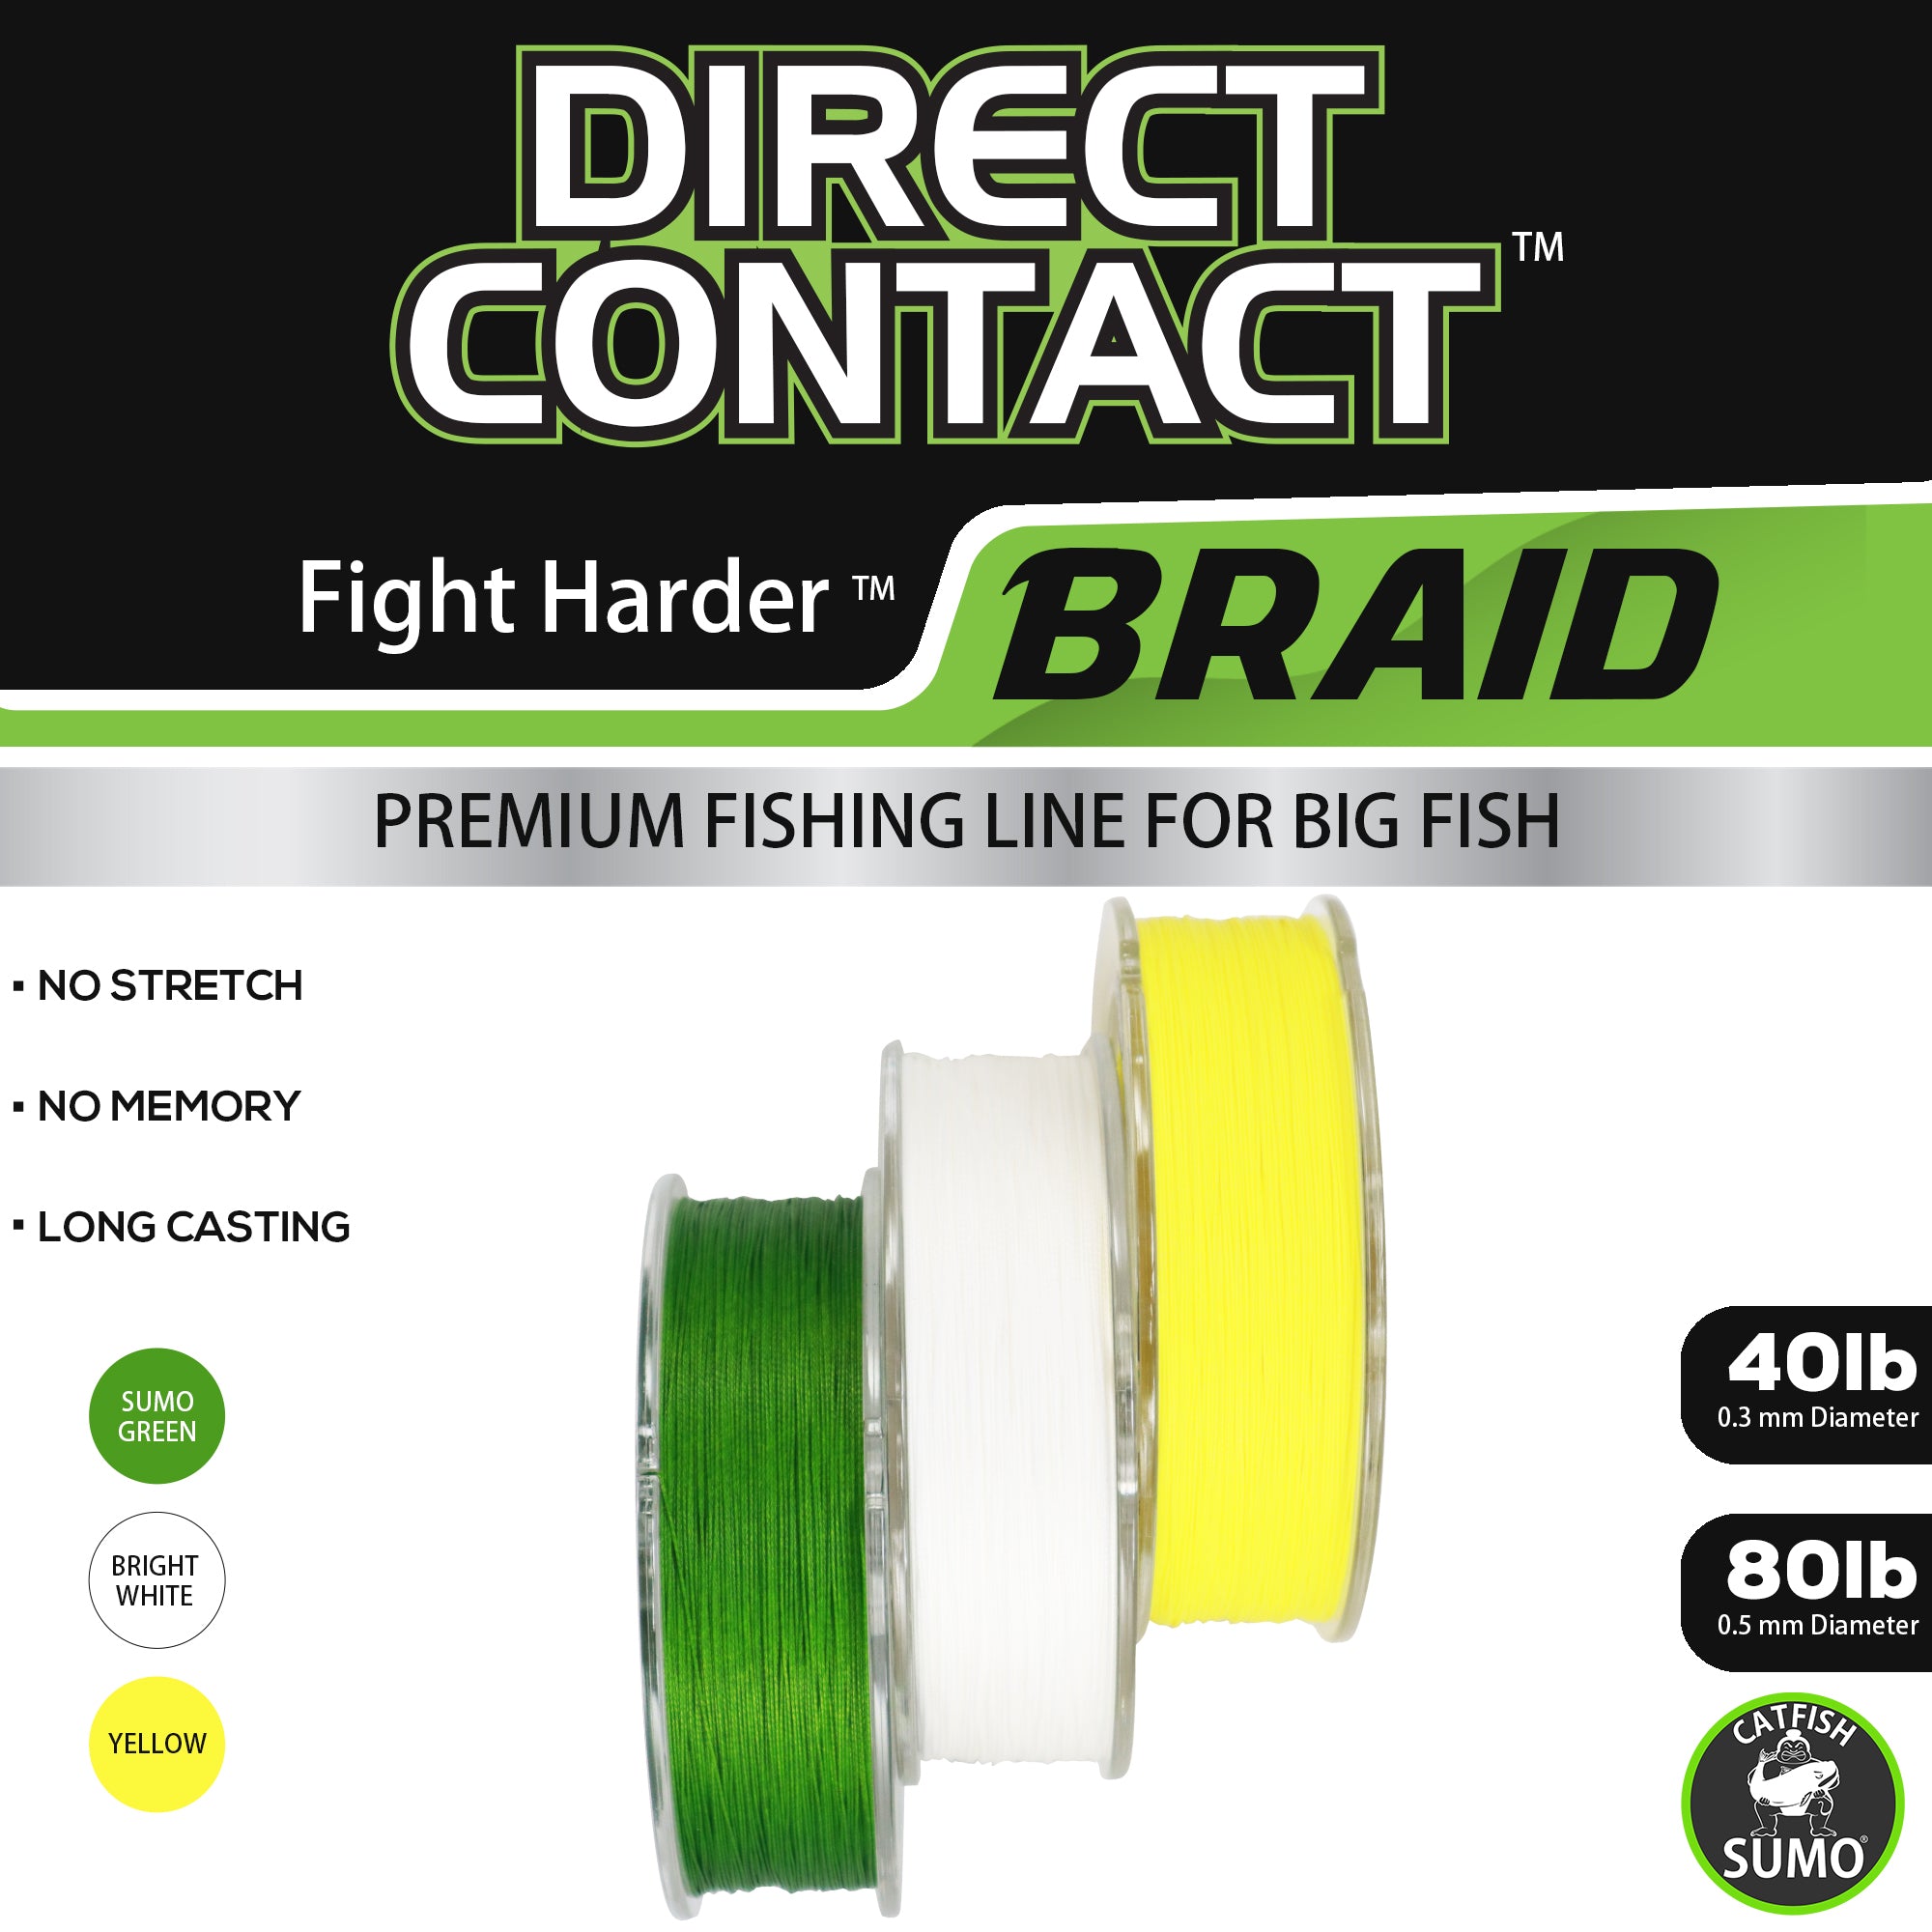 Direct Contact™ Premium Fishing Line for Big Fish, Braid, 300 Yard Spool